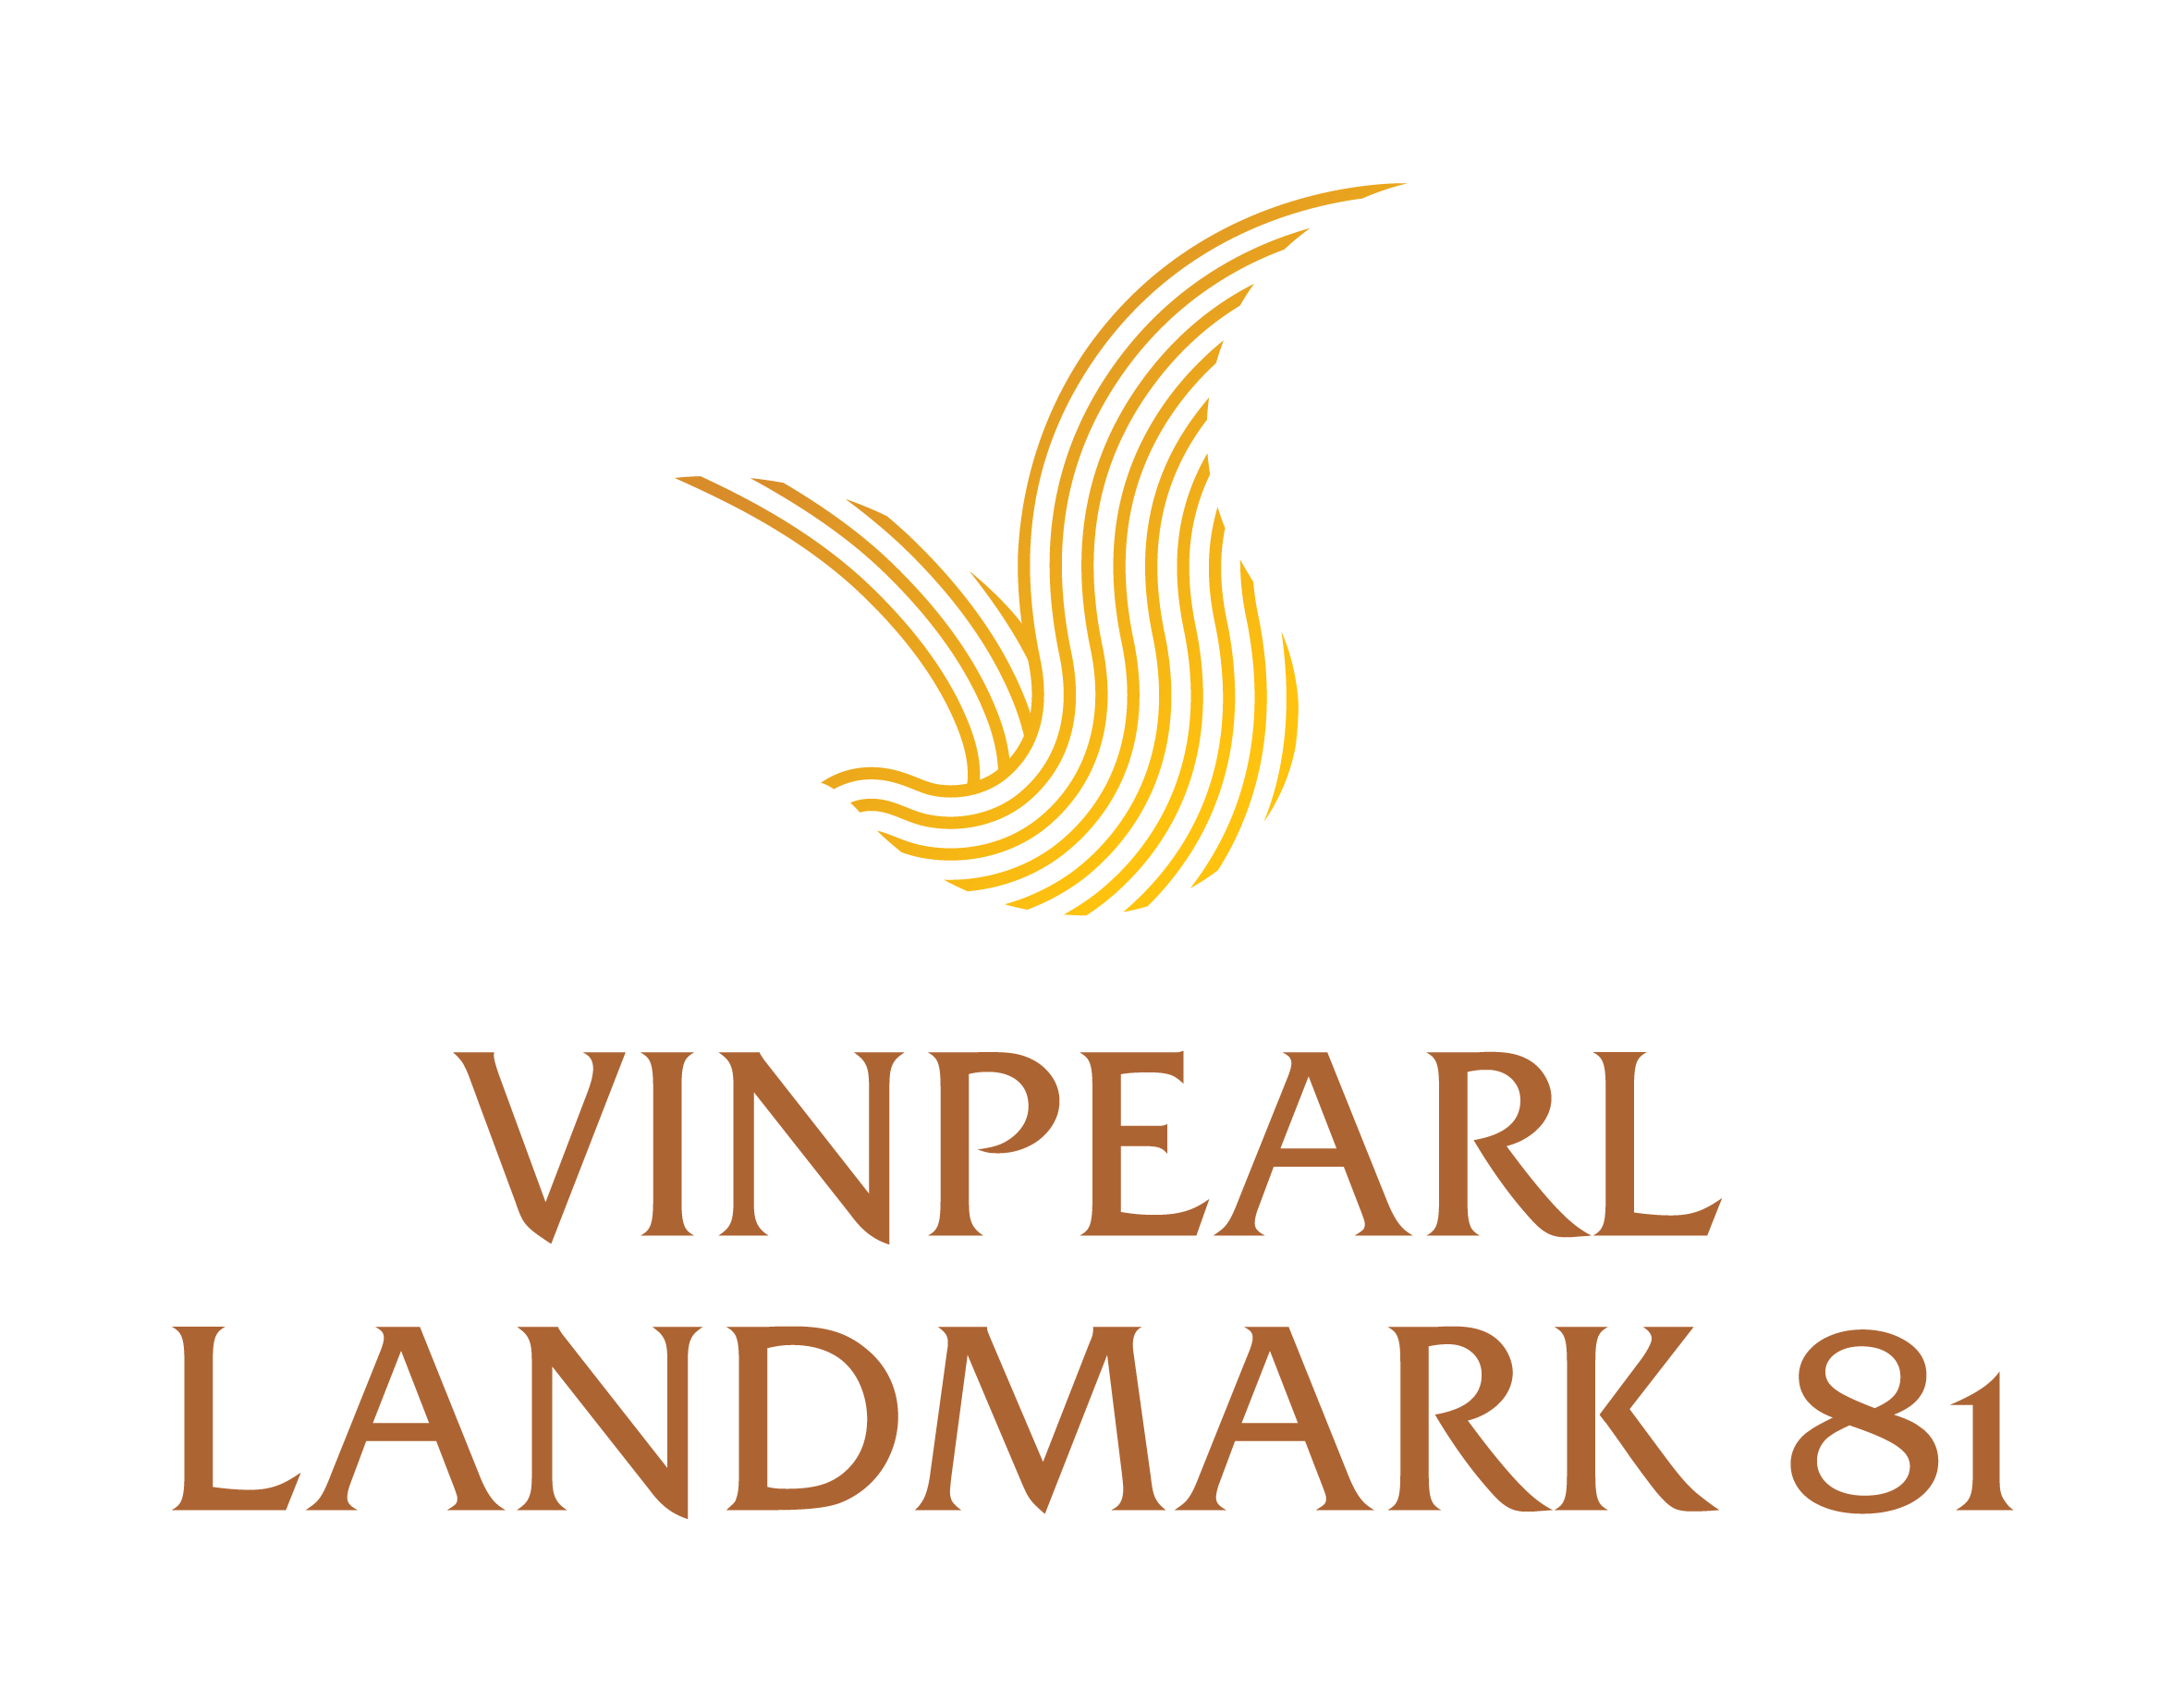 ORIENTAL PEARL RESTAURANT (VINPEARL LANDMARK 81, AUTOGRAPH)